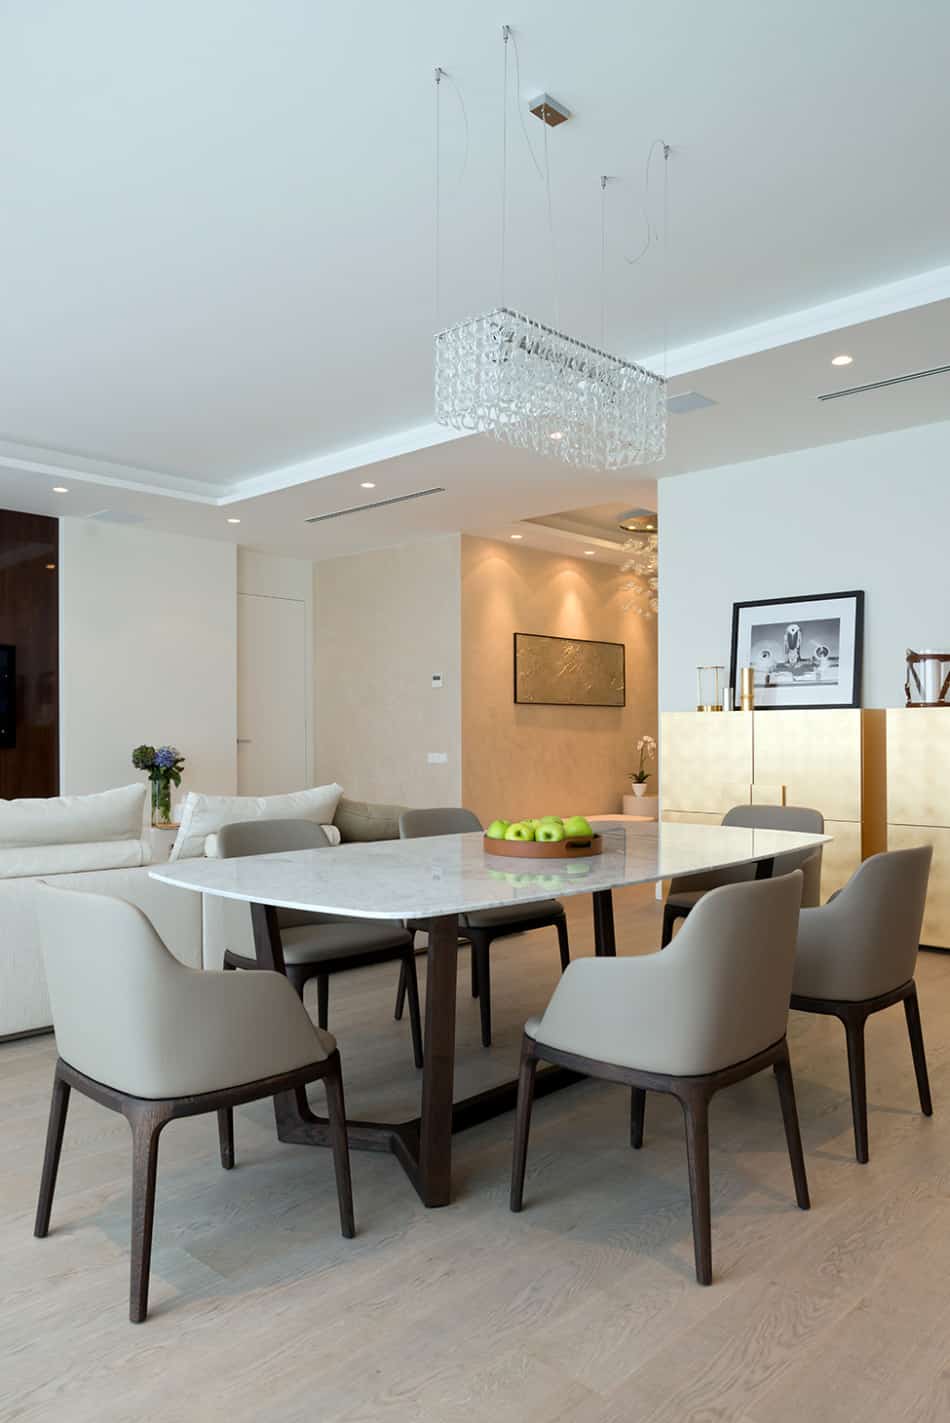 lighting-details-create-drama-modern-open-plan-apartment-5-table.jpg